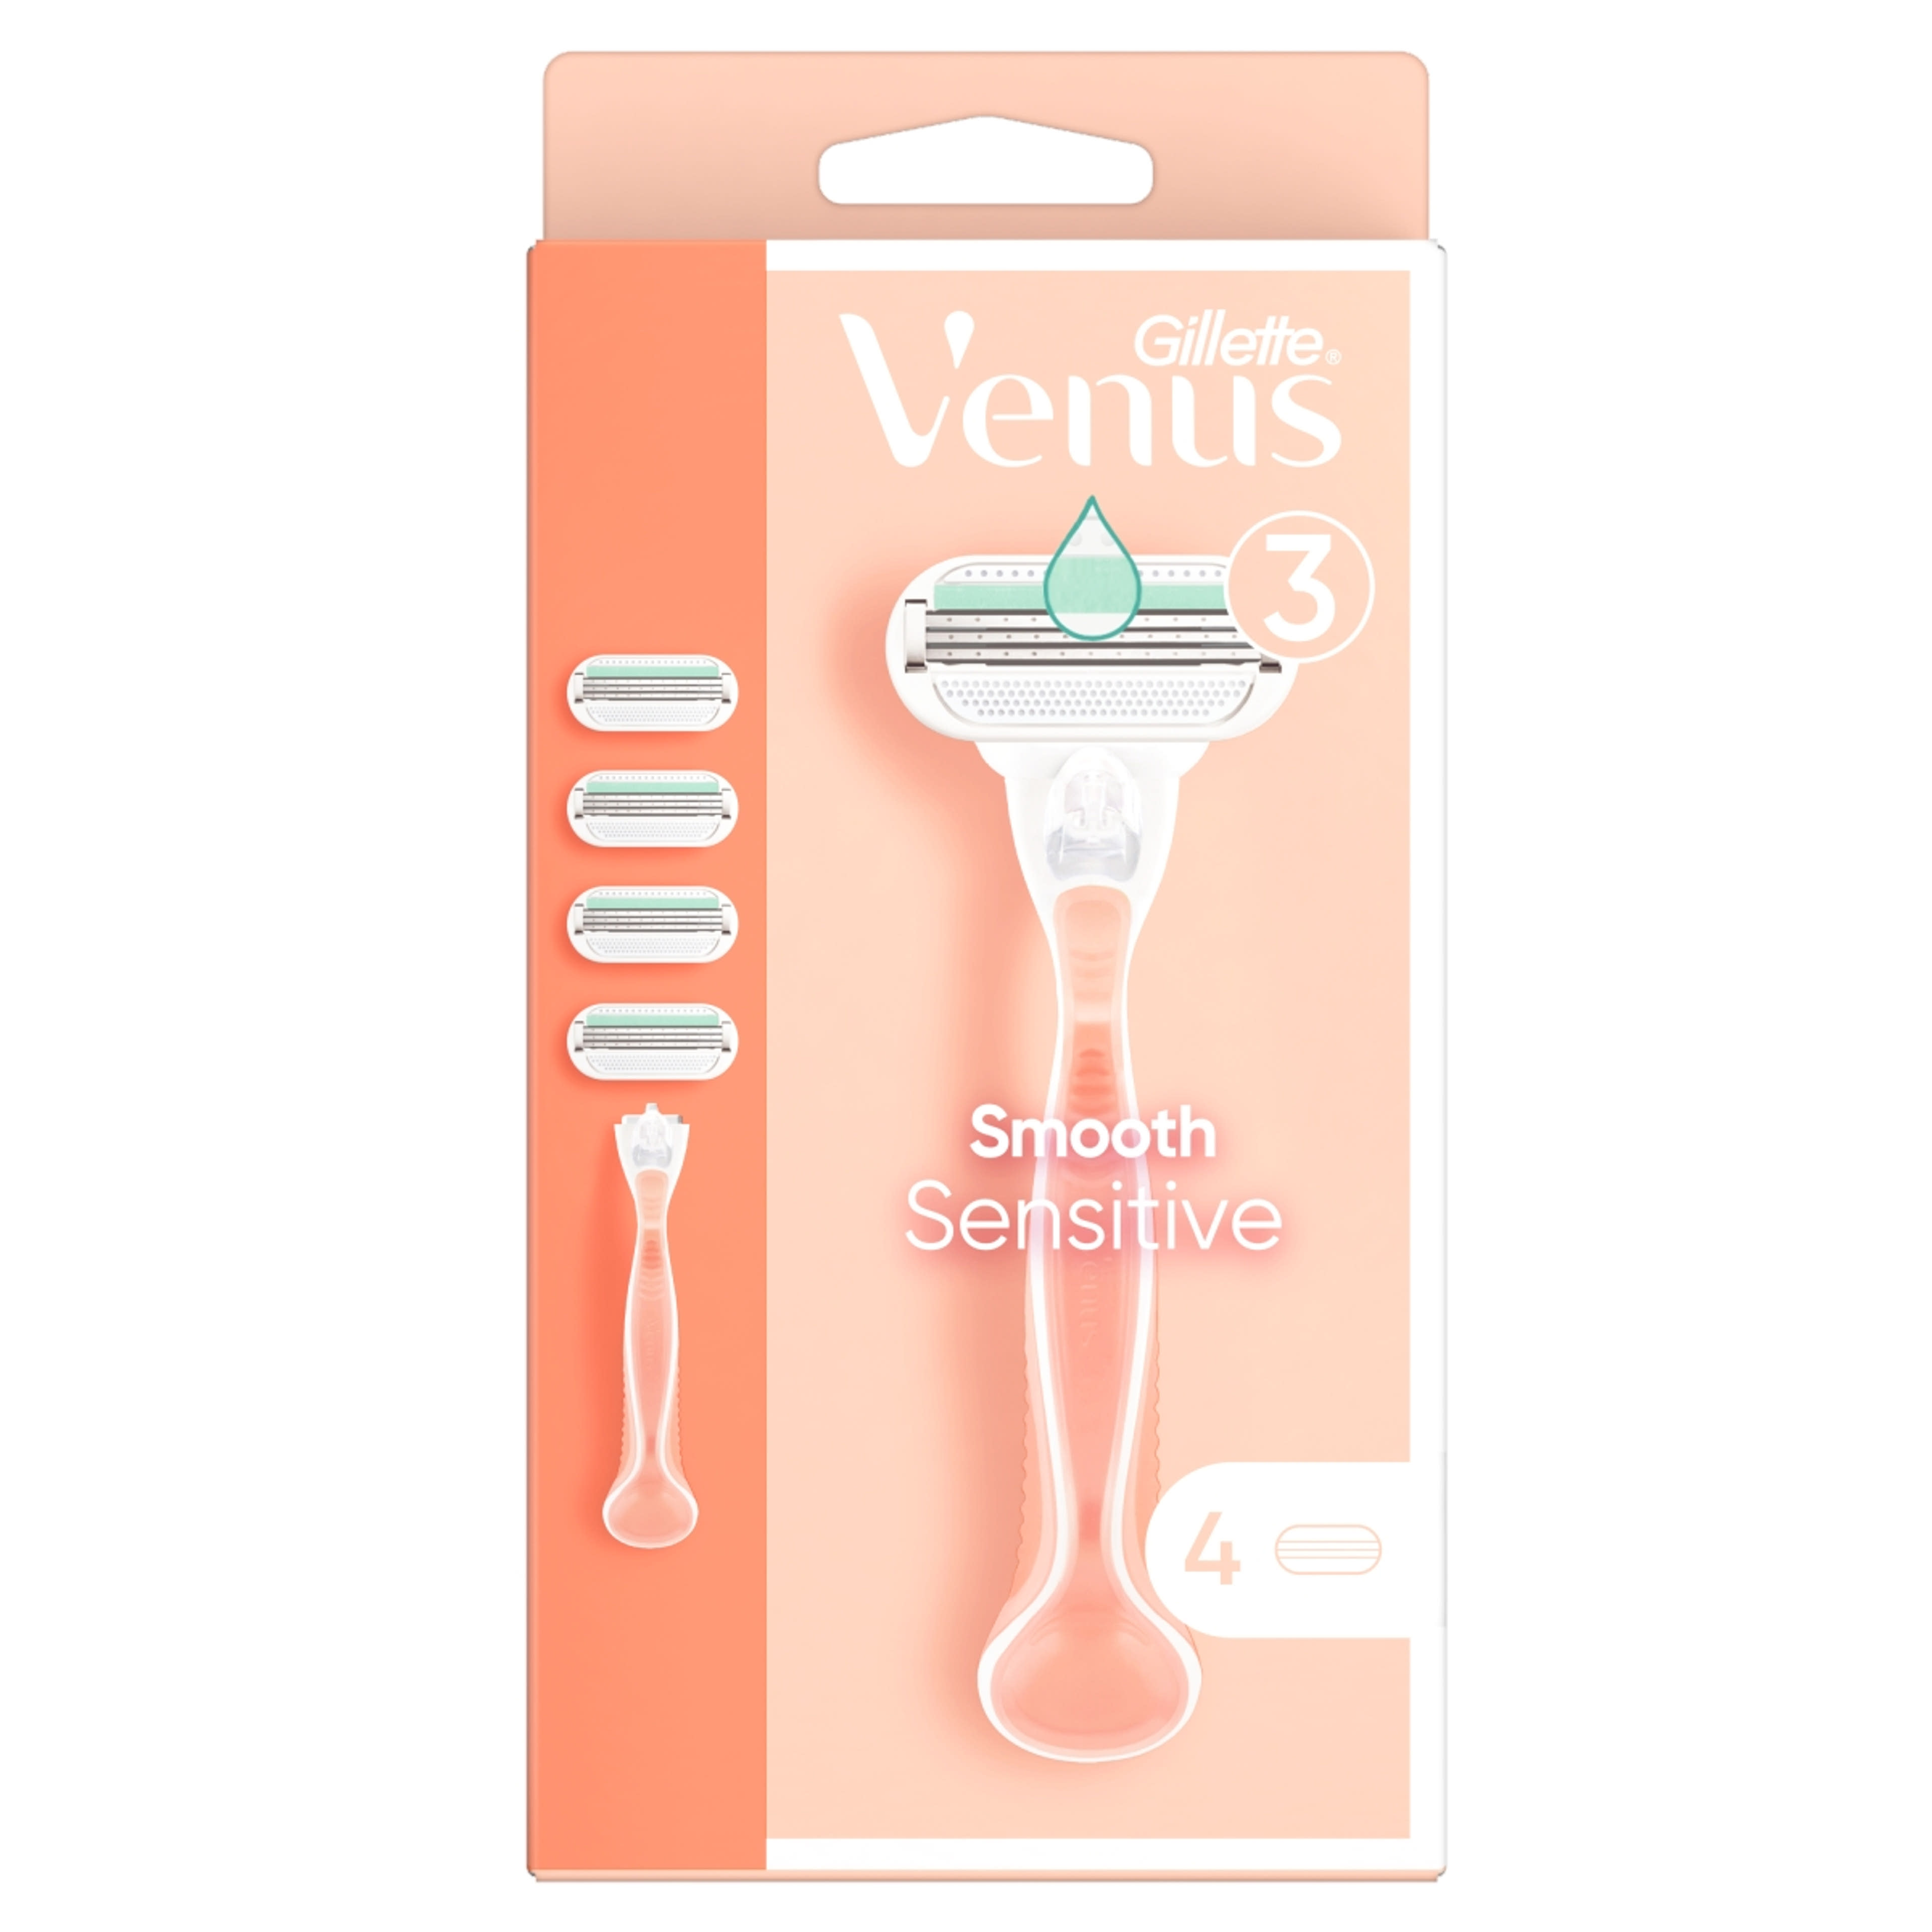 Gillette Venus Smooth Sensitive borotvakészlet 3 pengés + 4 borotvabetét - 1 db-1